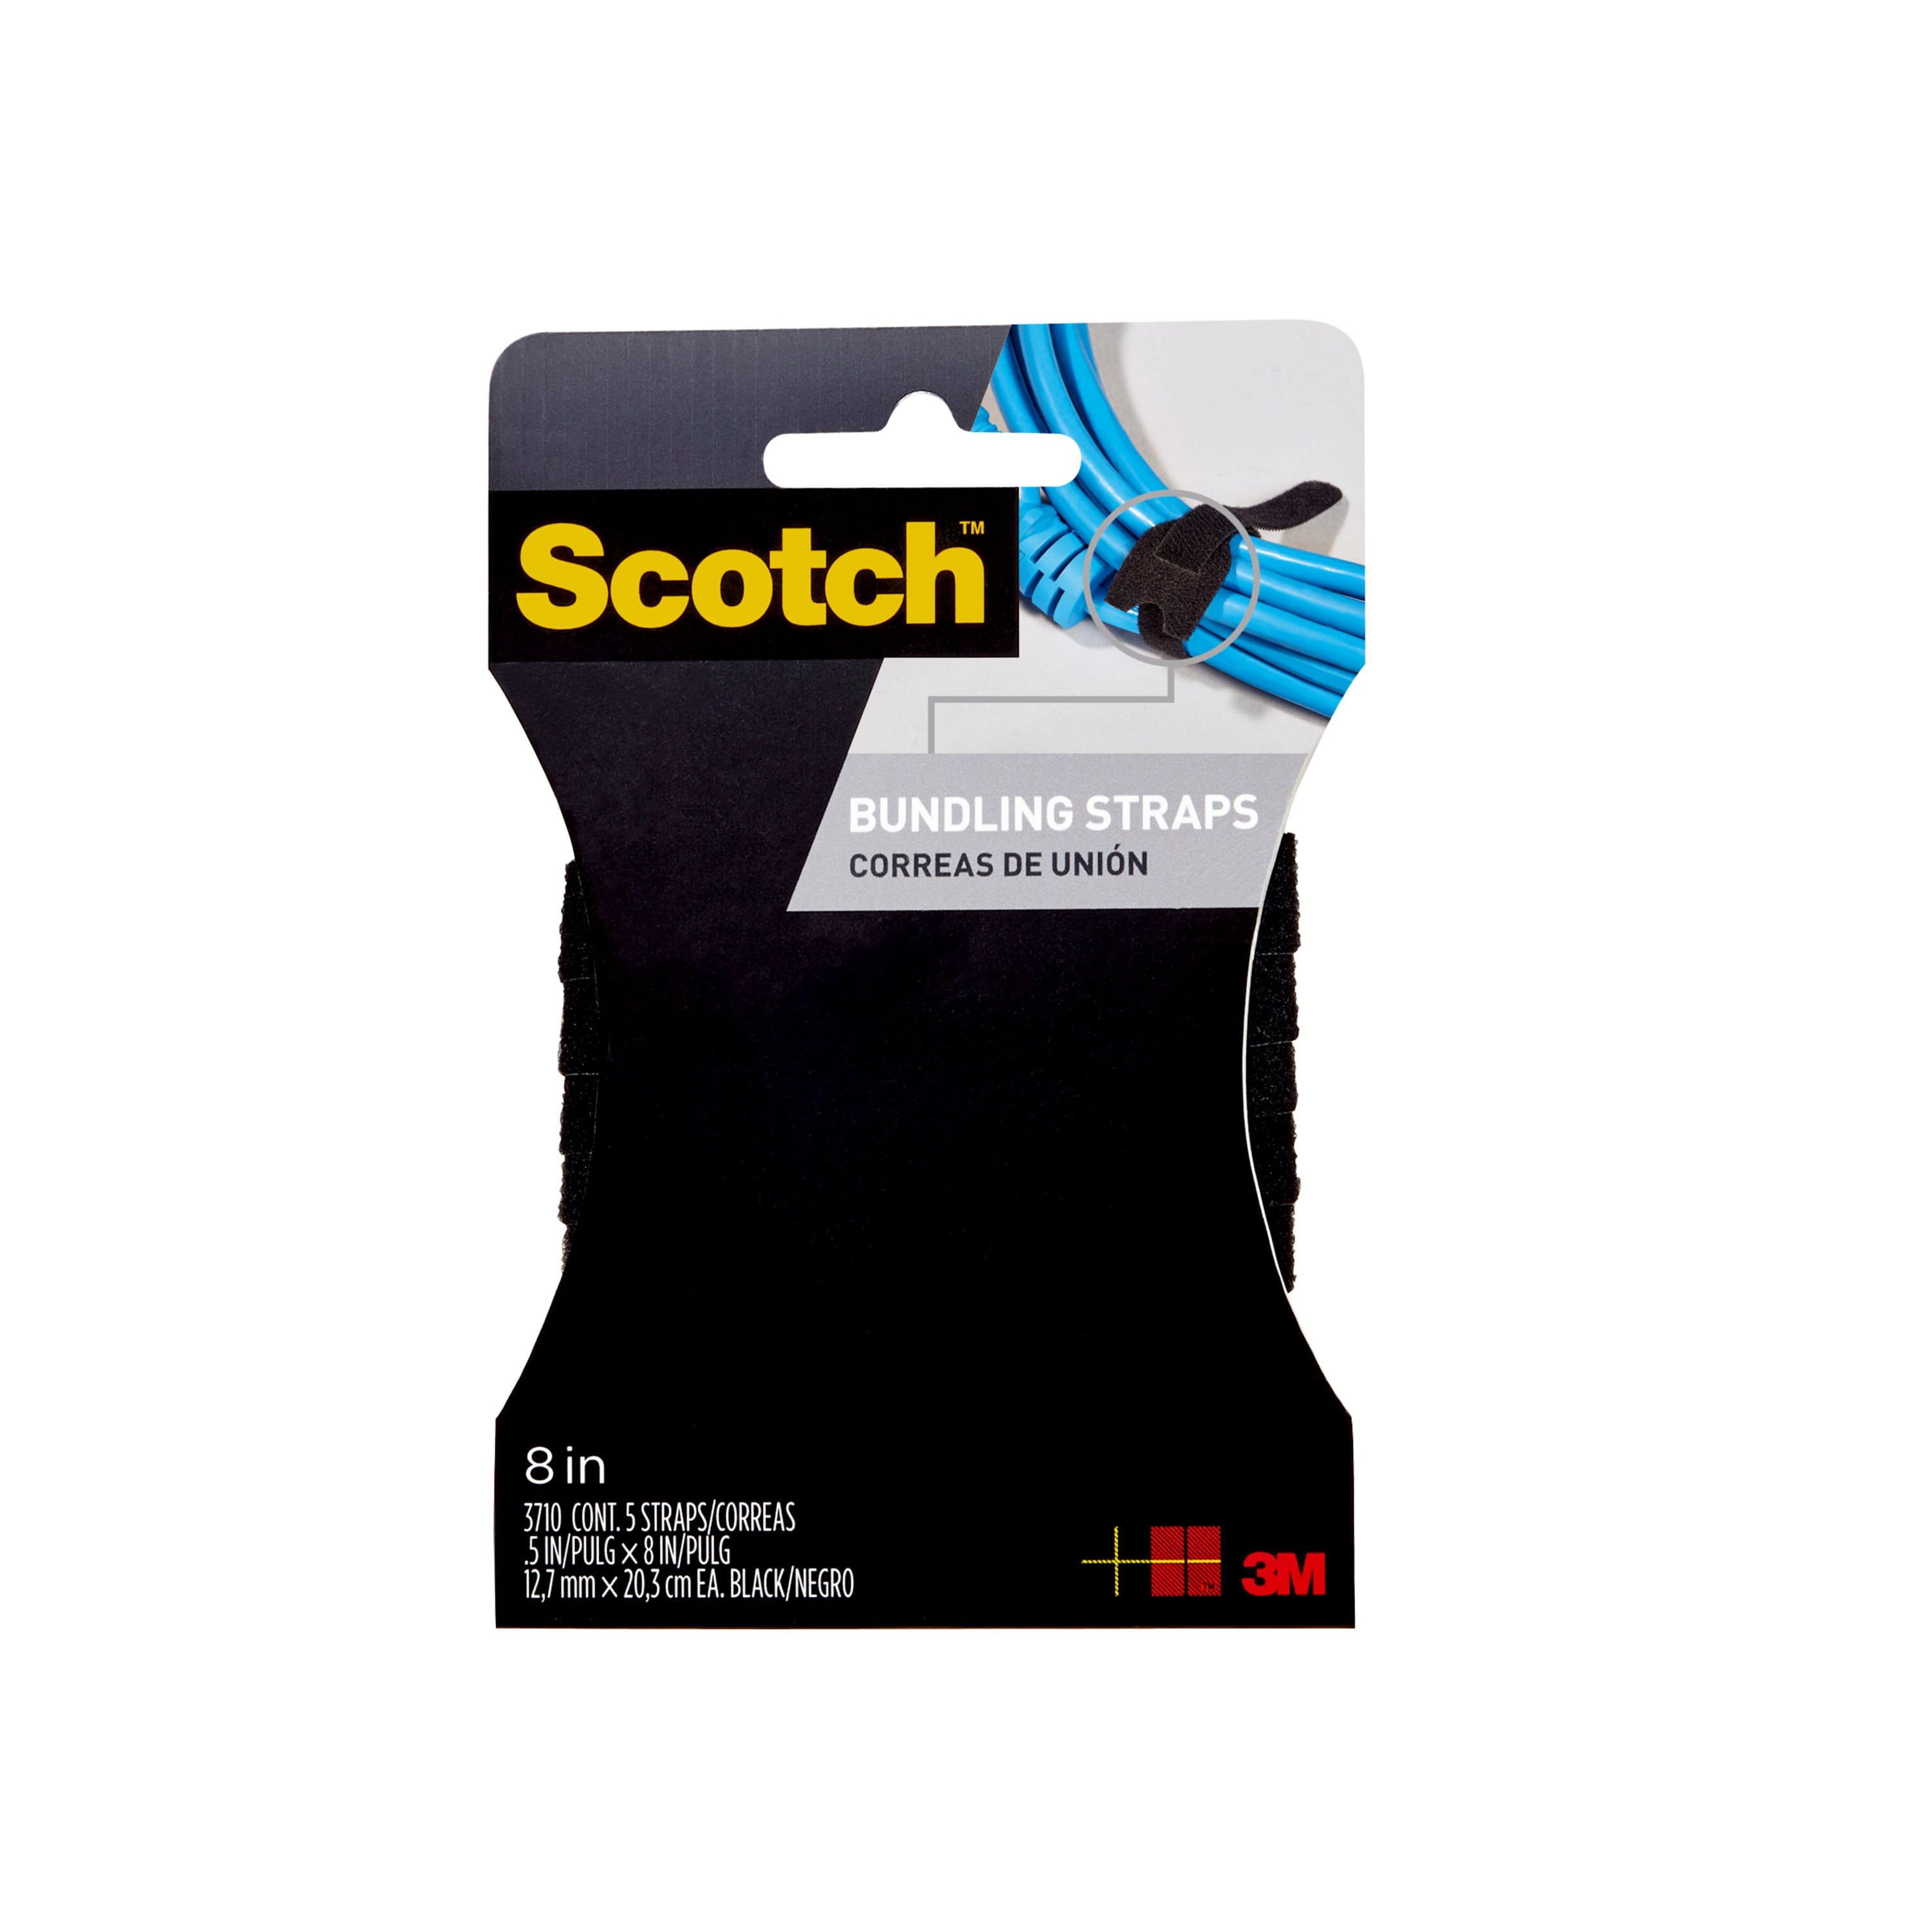 Scotch Bundling Straps, 0.5 x 8 in, Black, 5 Strap Ties